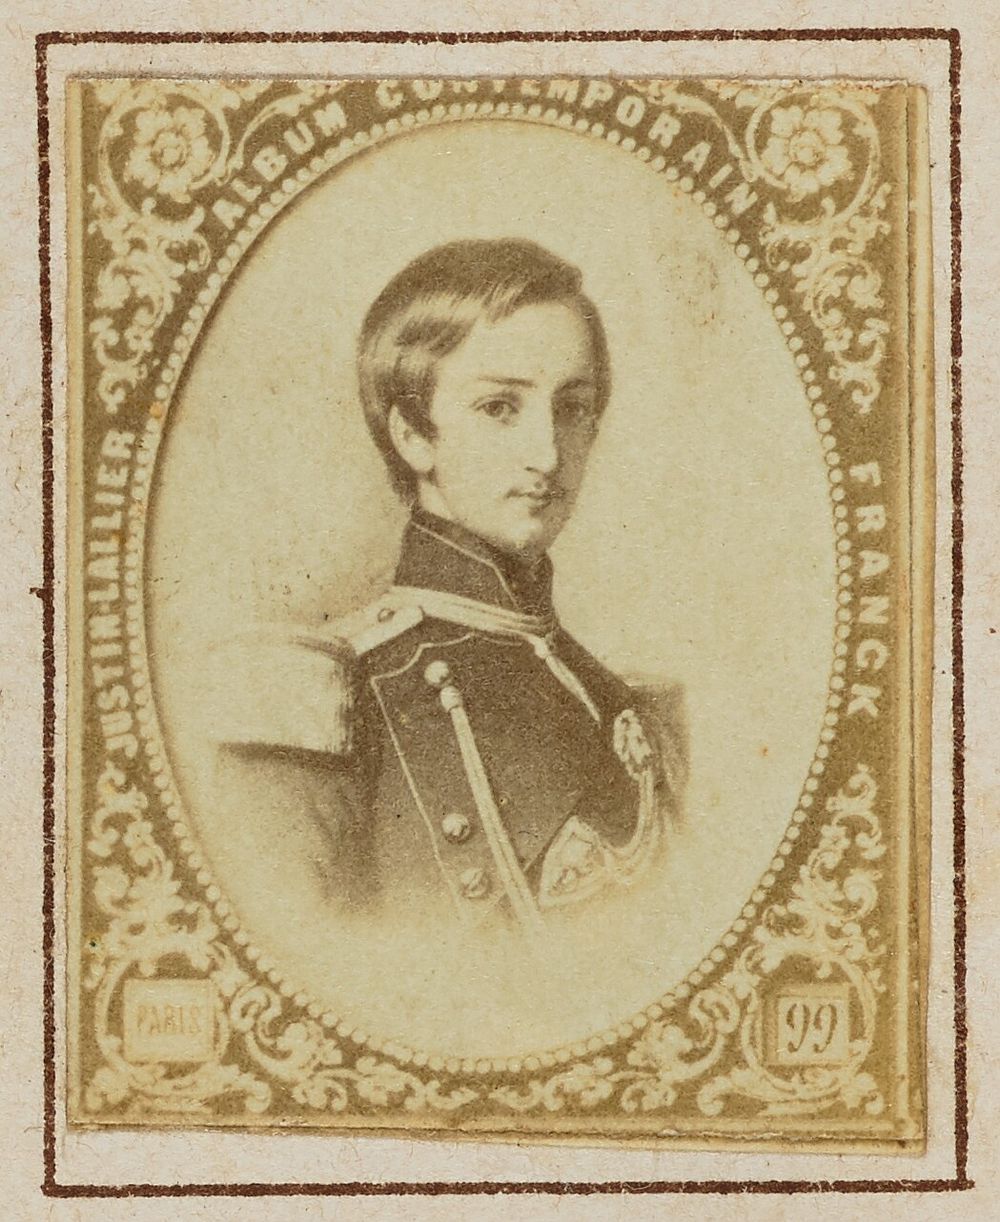 Antoine, Duke of Montpensier by Franck François Marie Louis Alexandre Gobinet de Villecholles and Justin Lallier